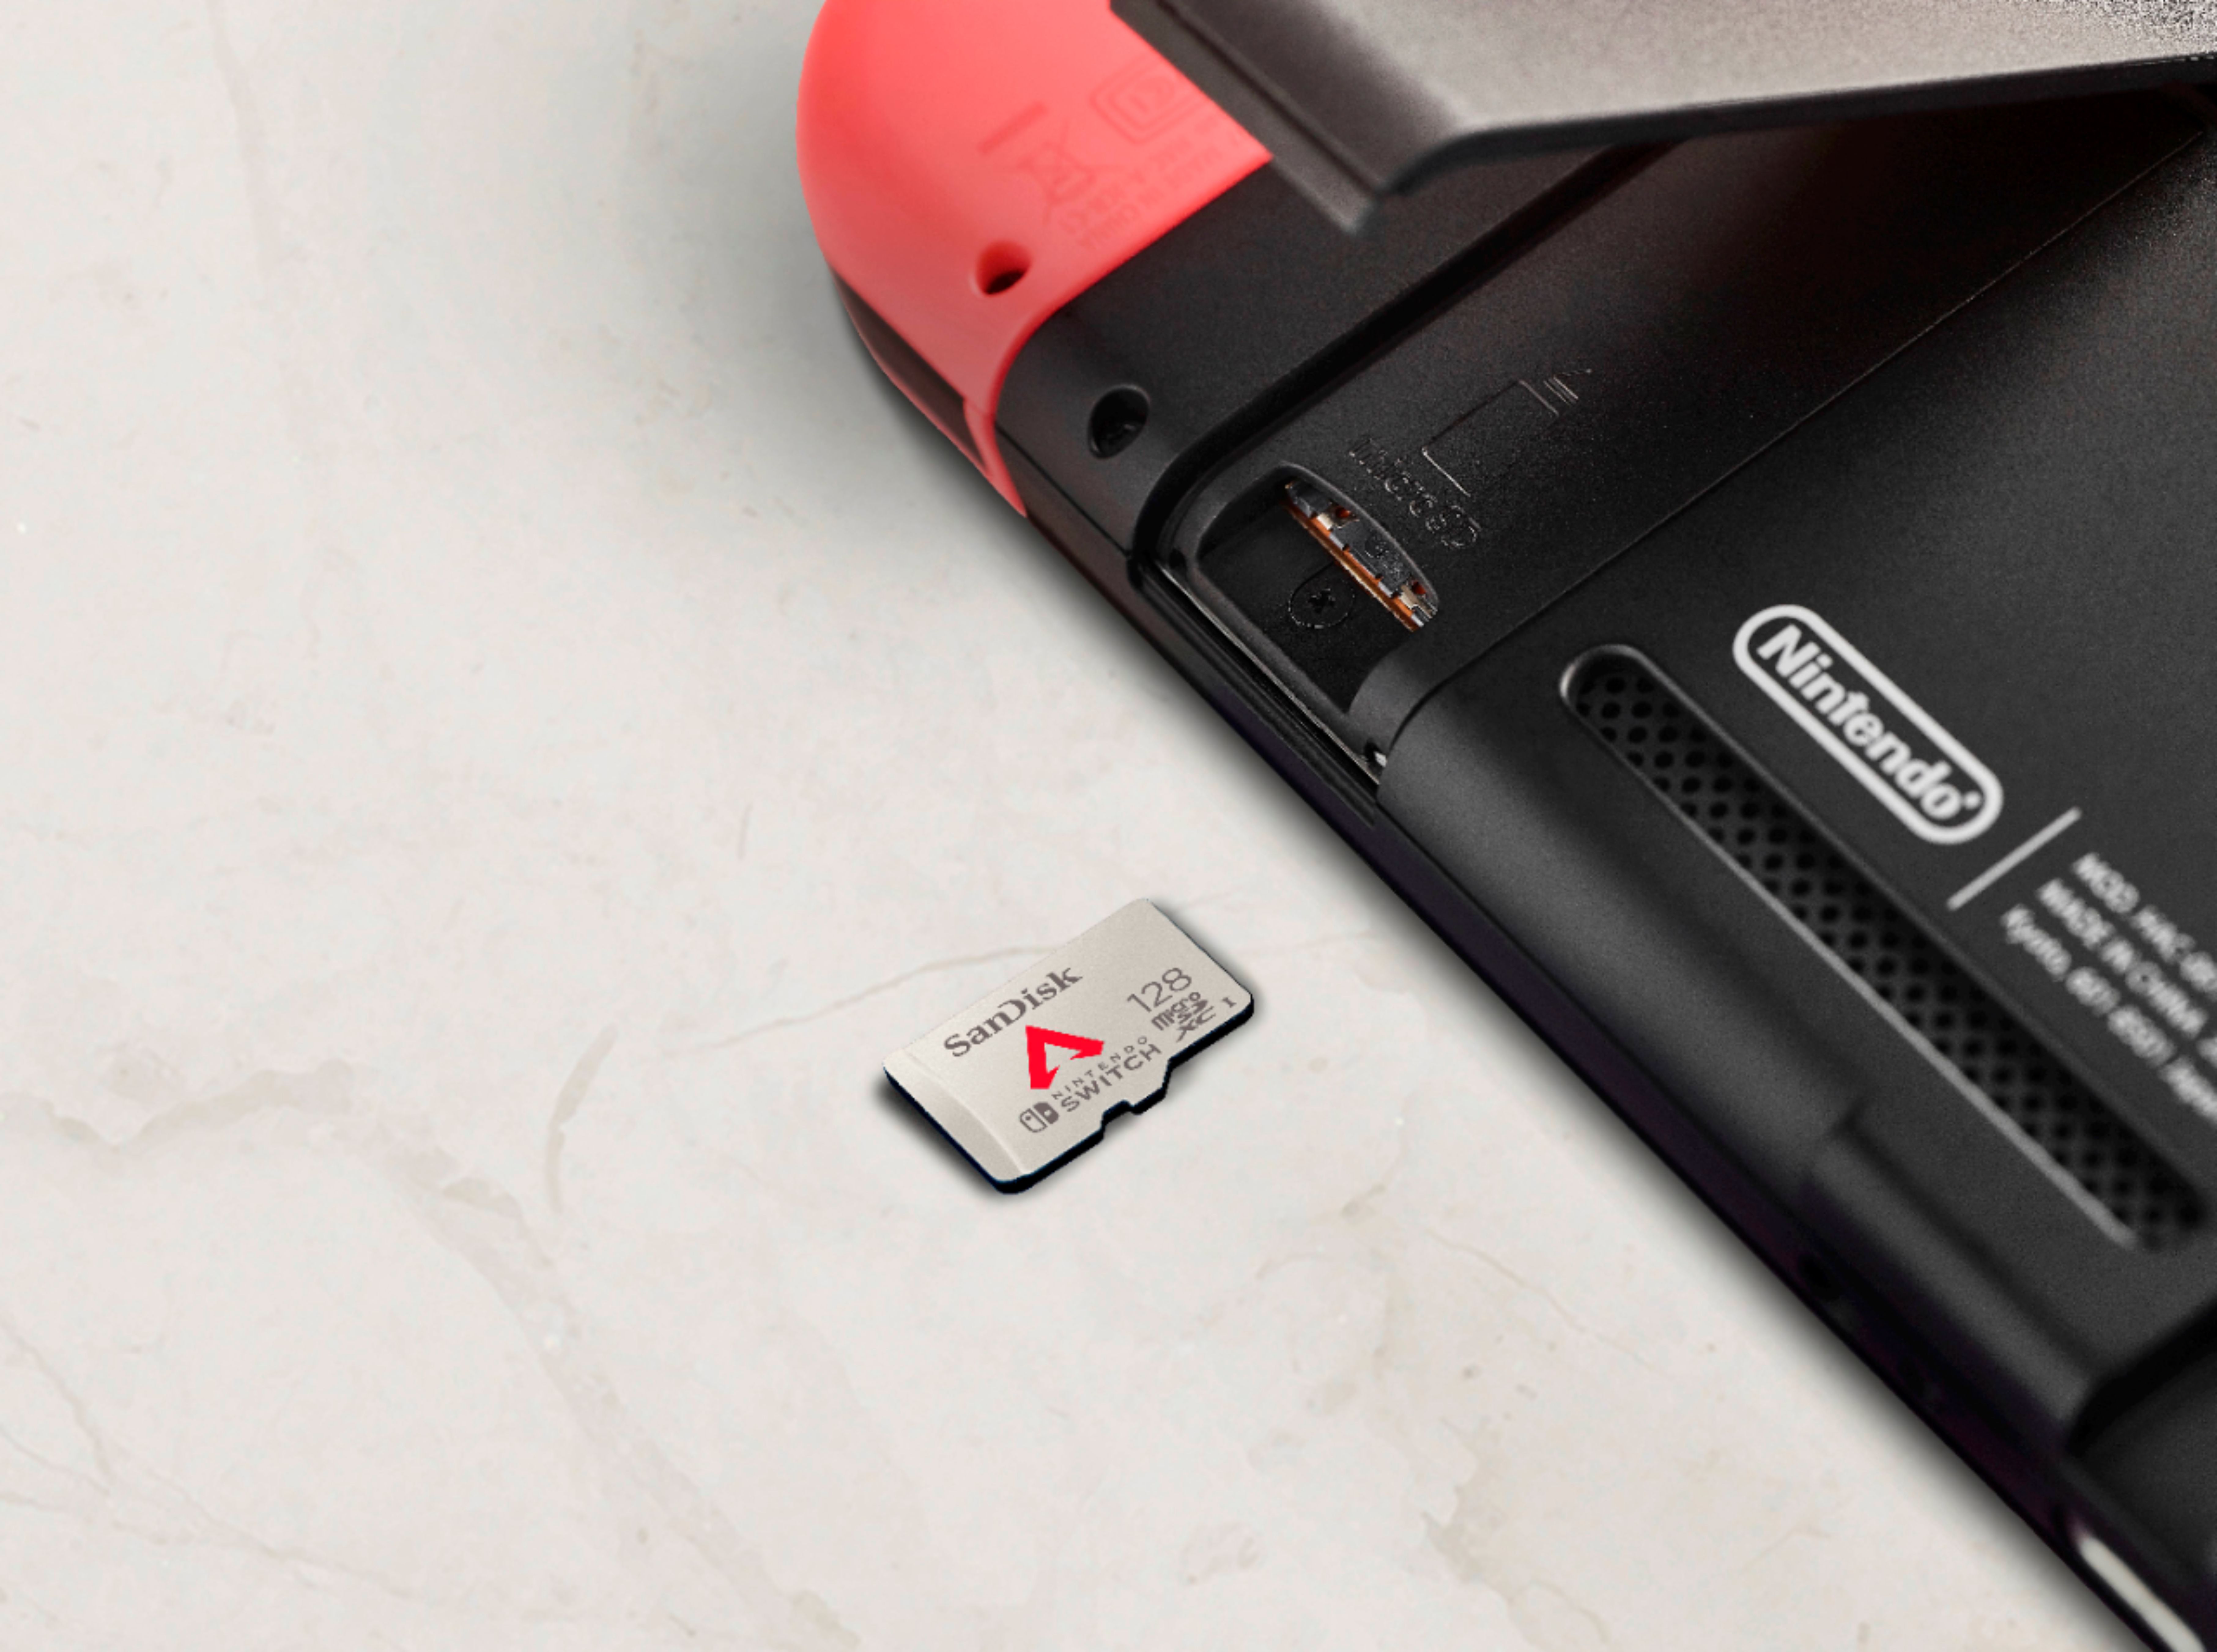 Carte Micro SD SANDISK Nintendo Switch Apex Legends 128Go